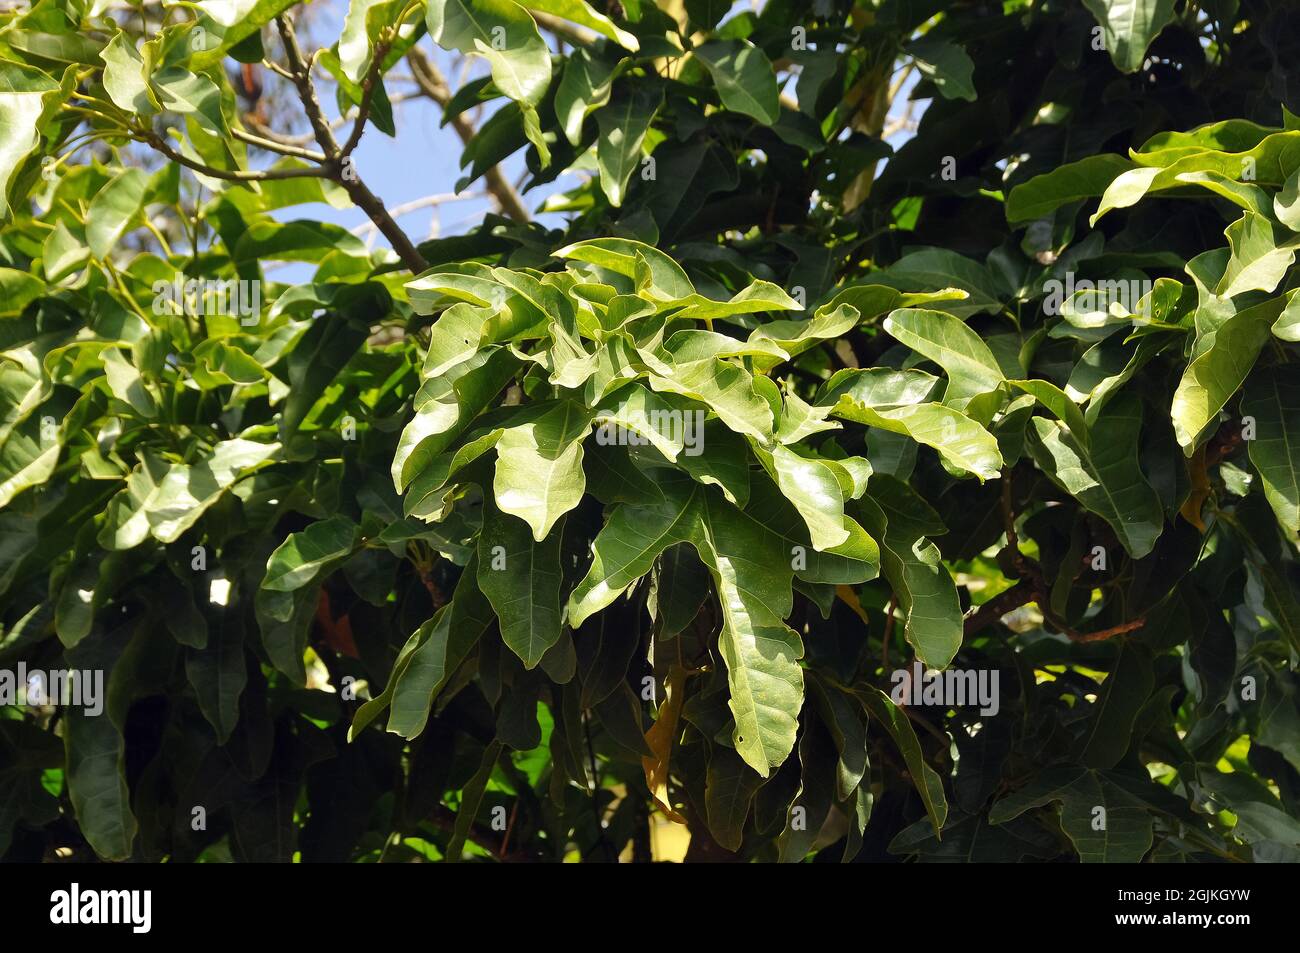 lame tree, Illawarra flame tree, lacebark tree, kurrajong, Brachychiton acerifolius, juharlevelű lángfa,  Australia Stock Photo